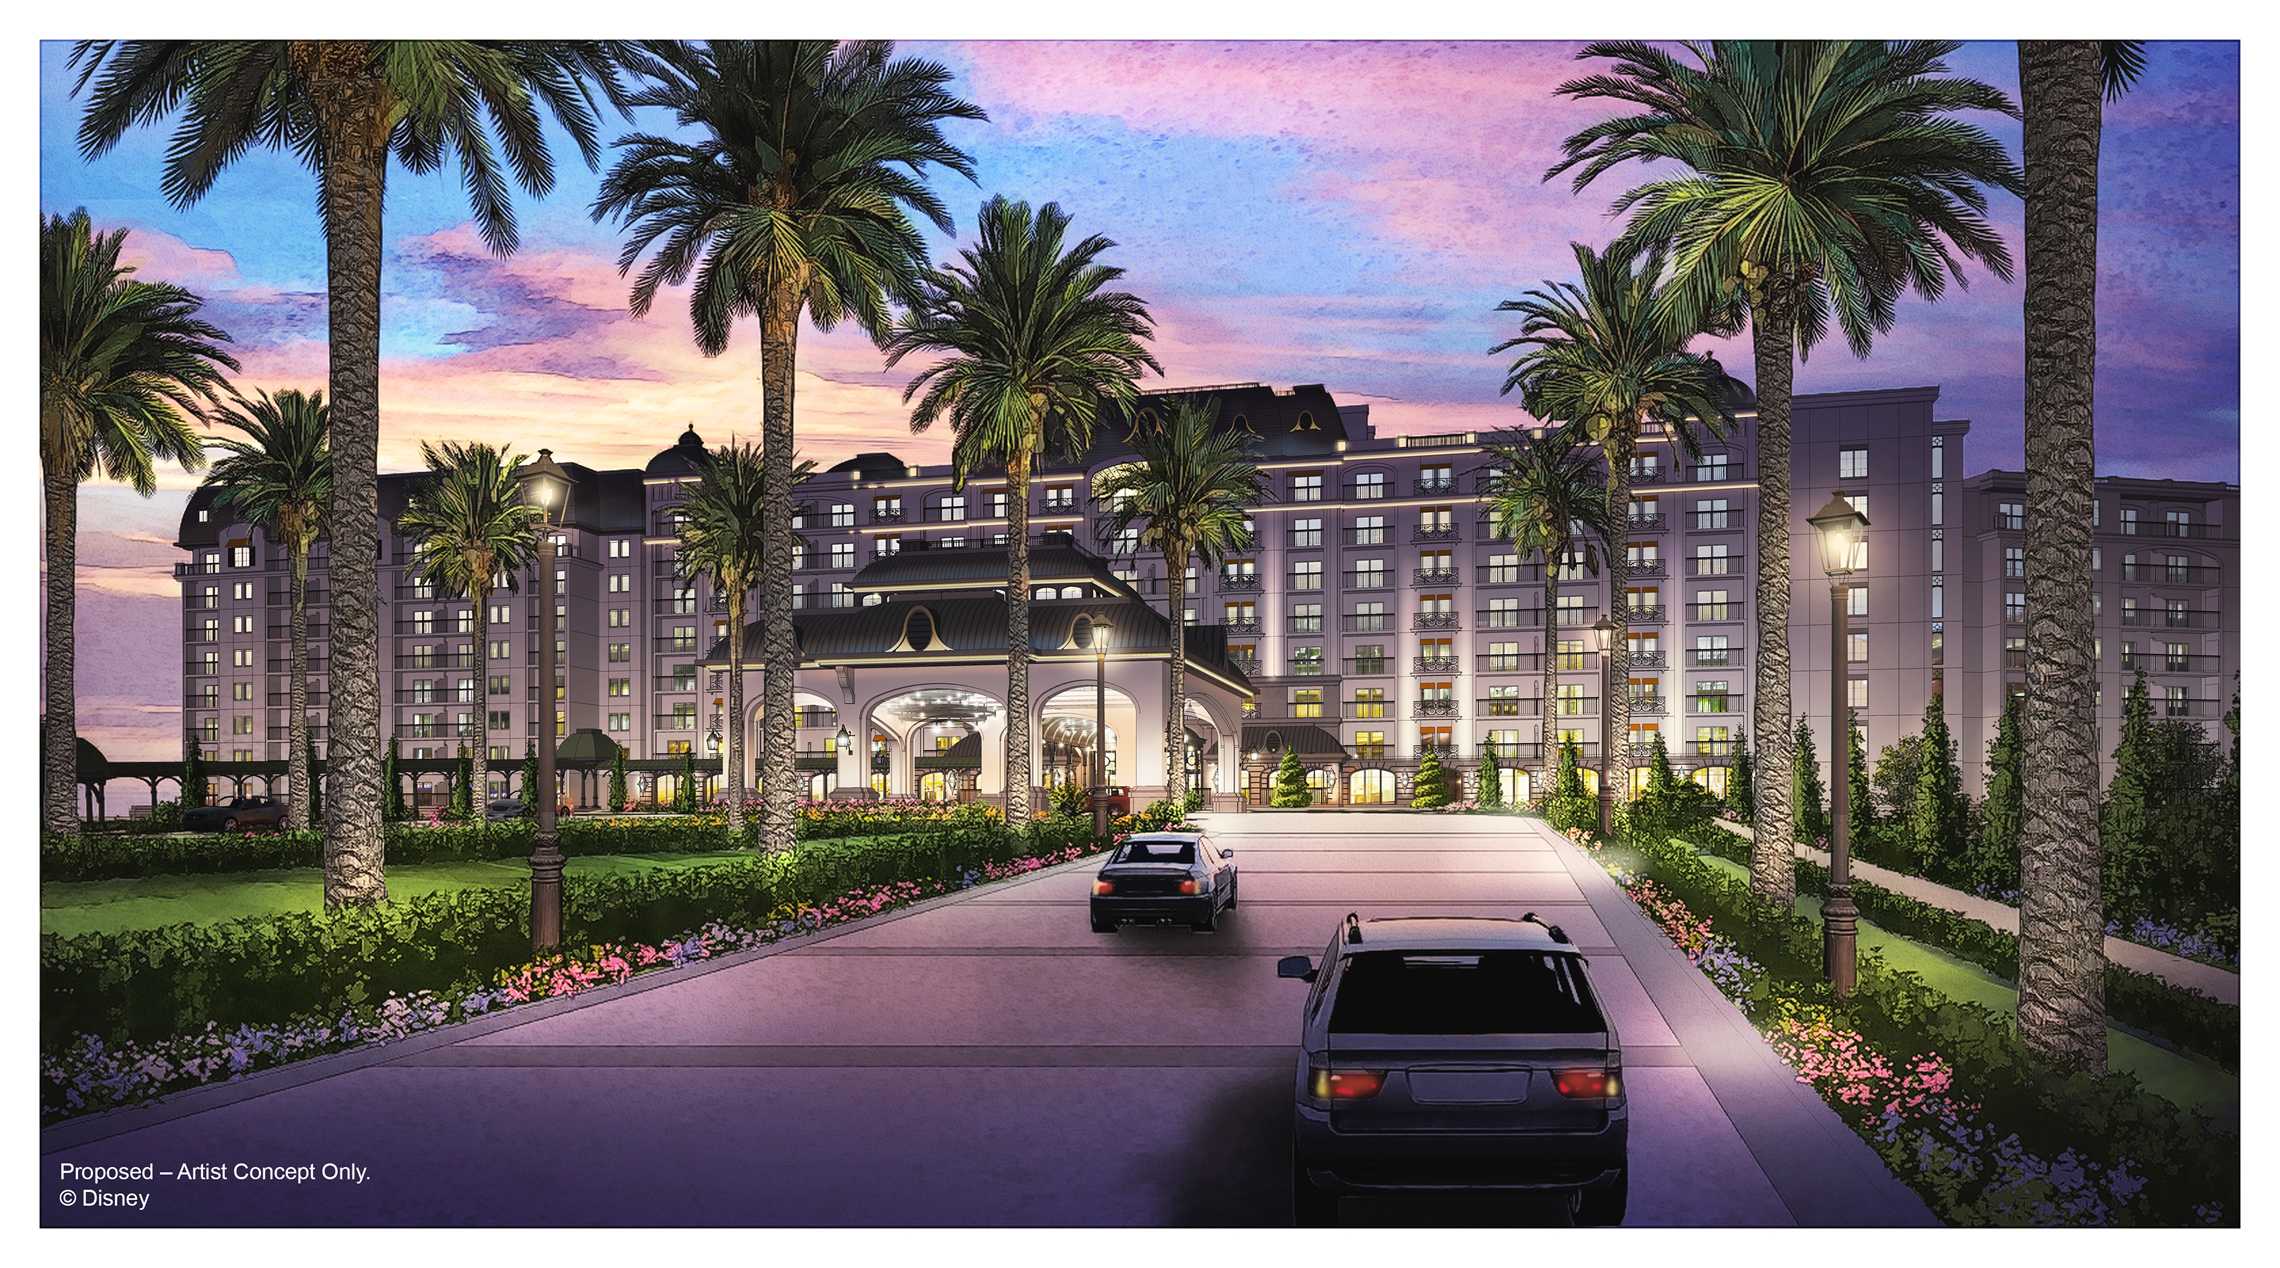 The 3 Brand New Hotels Walt Disney World Will Open by 2022